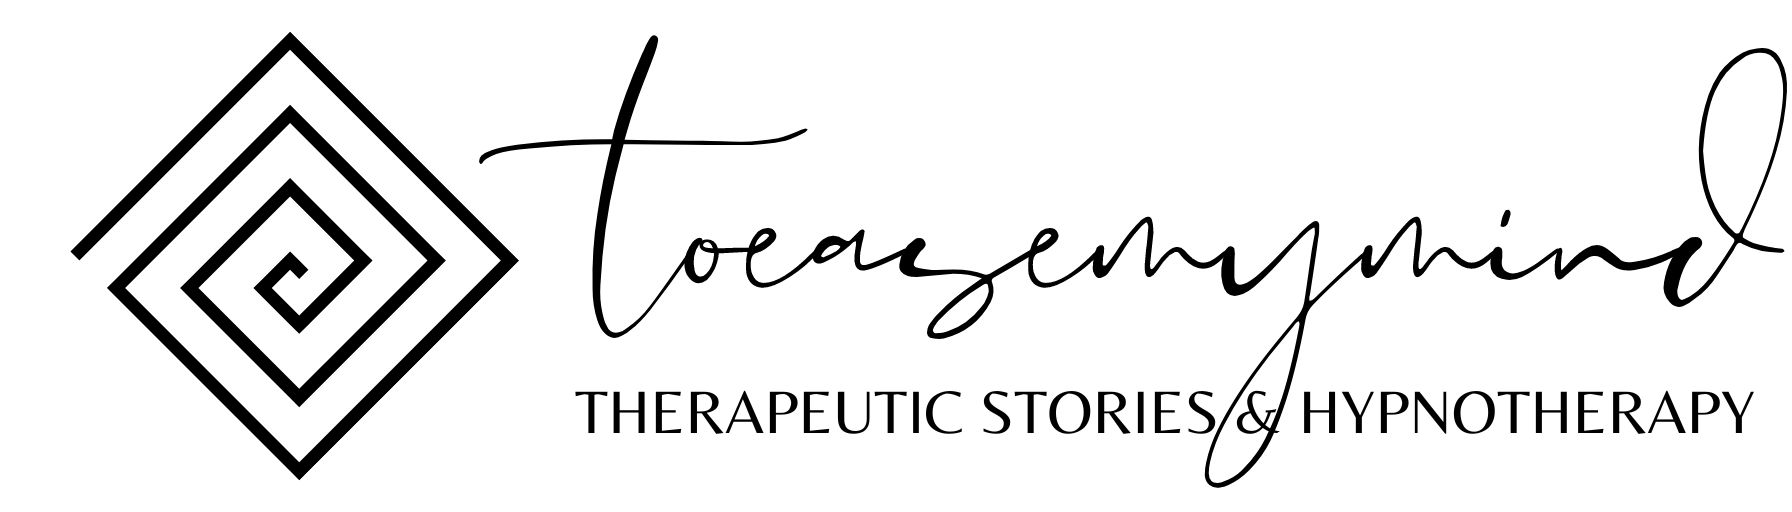 toeasemymind logo